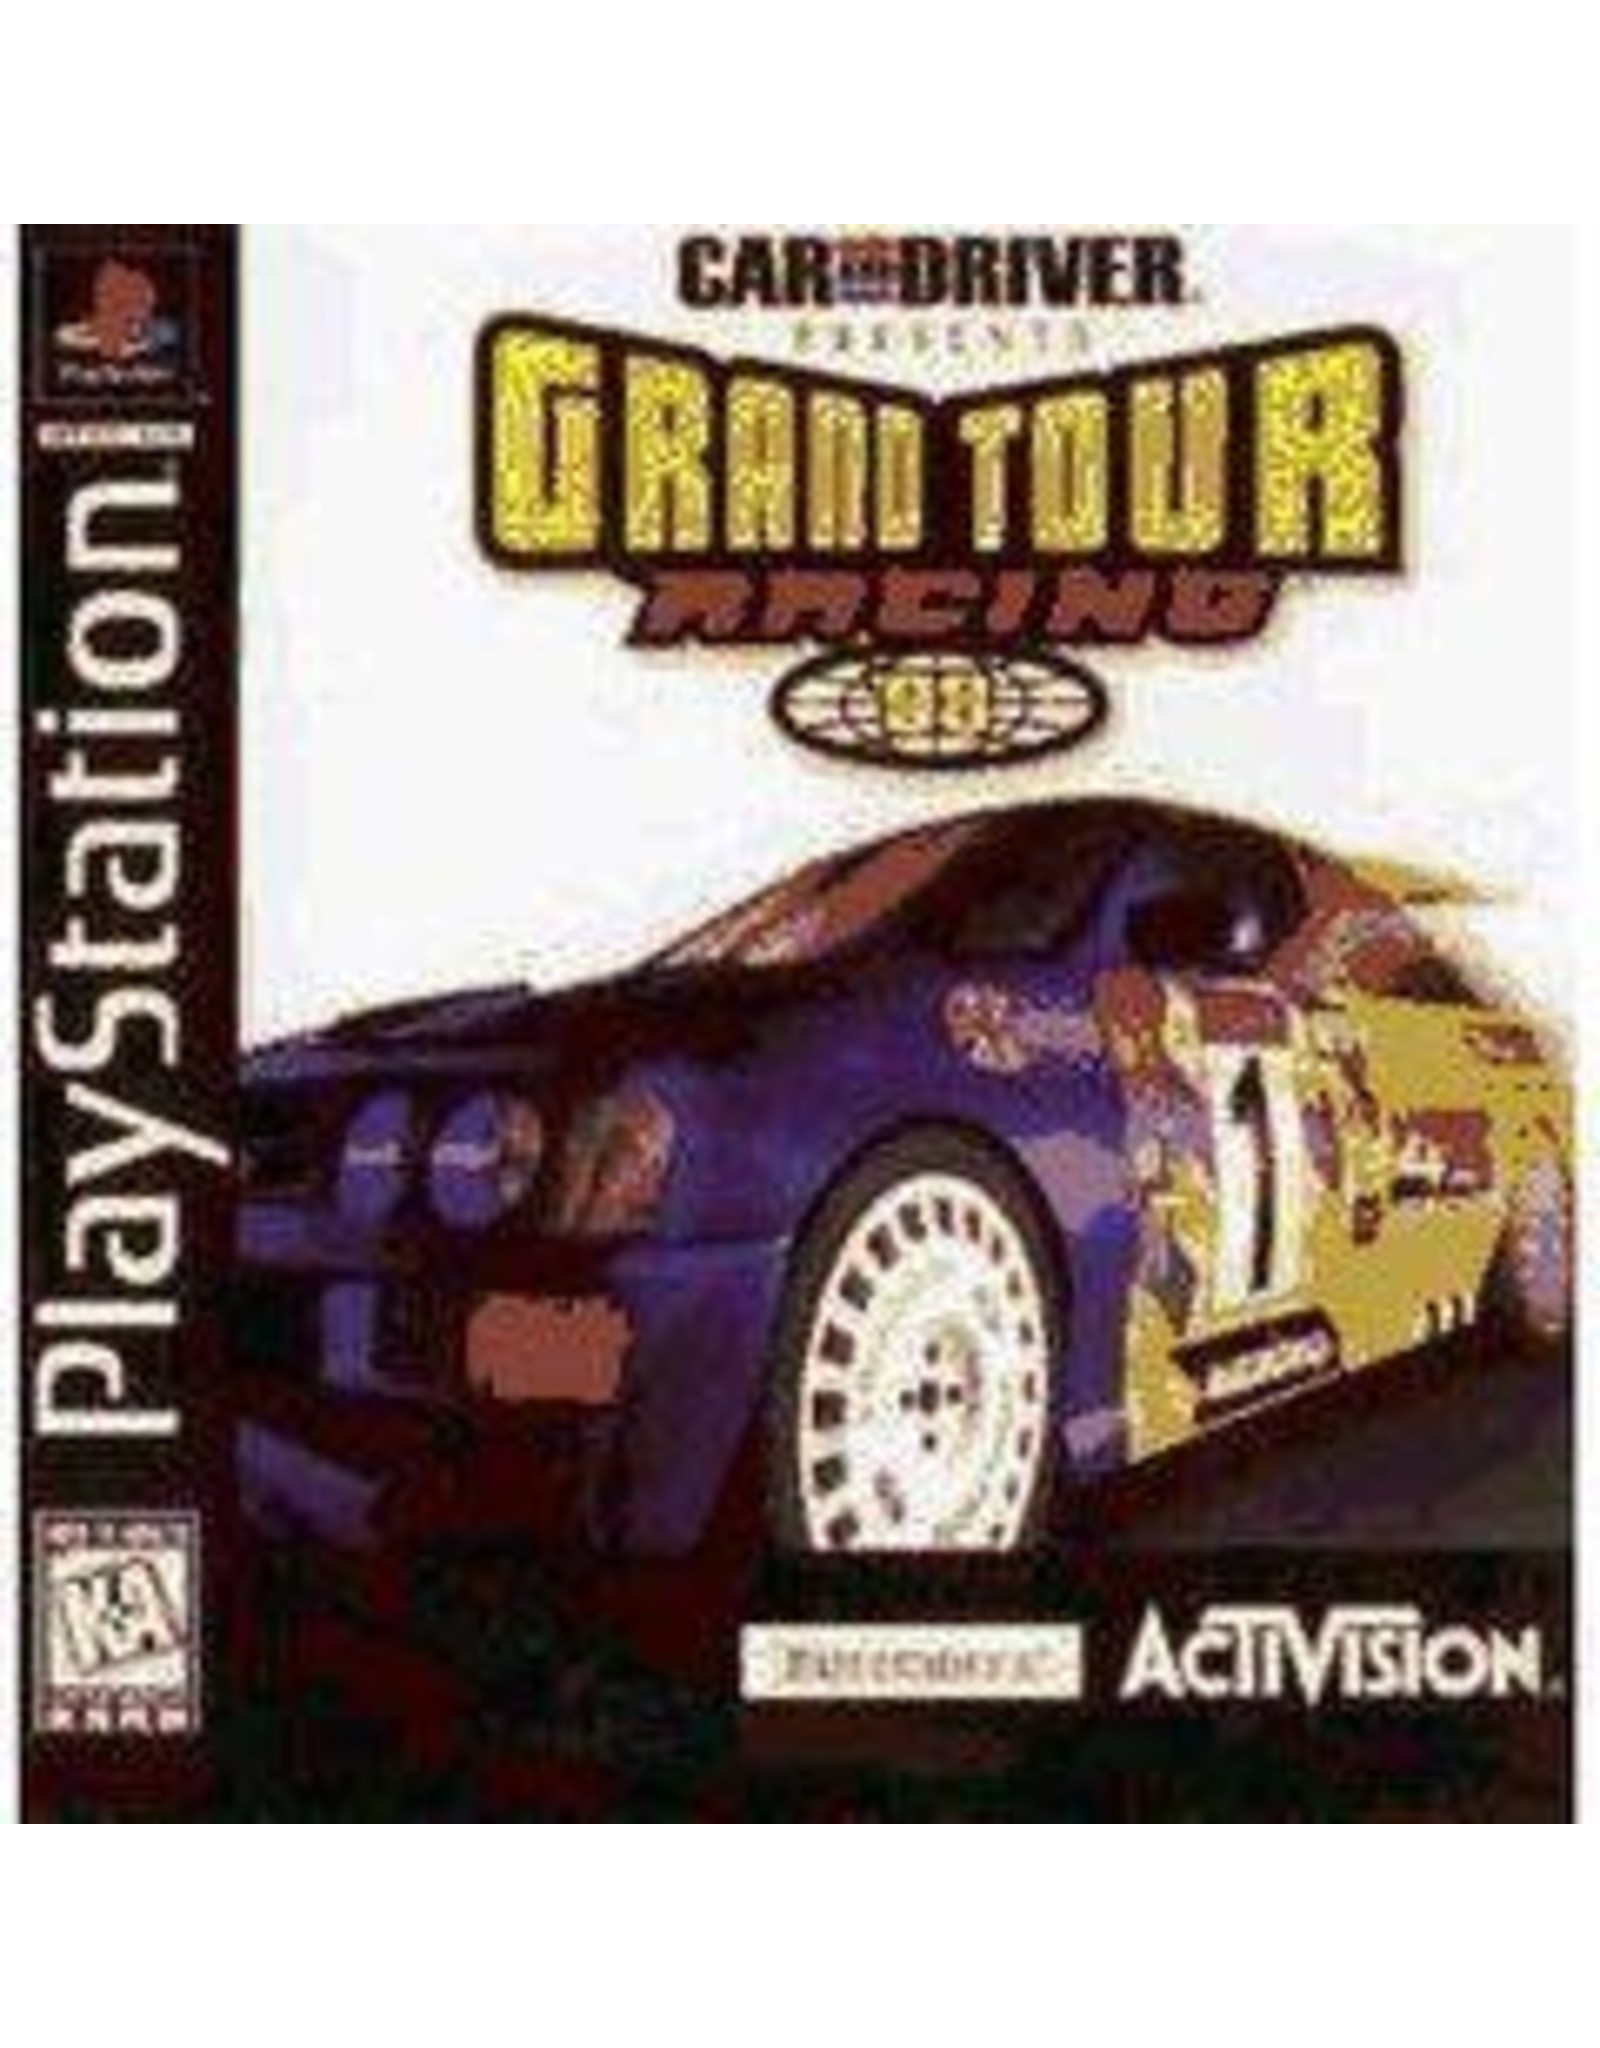 Playstation Car and Driver Presents Grand Tour Racing 98 (CiB)